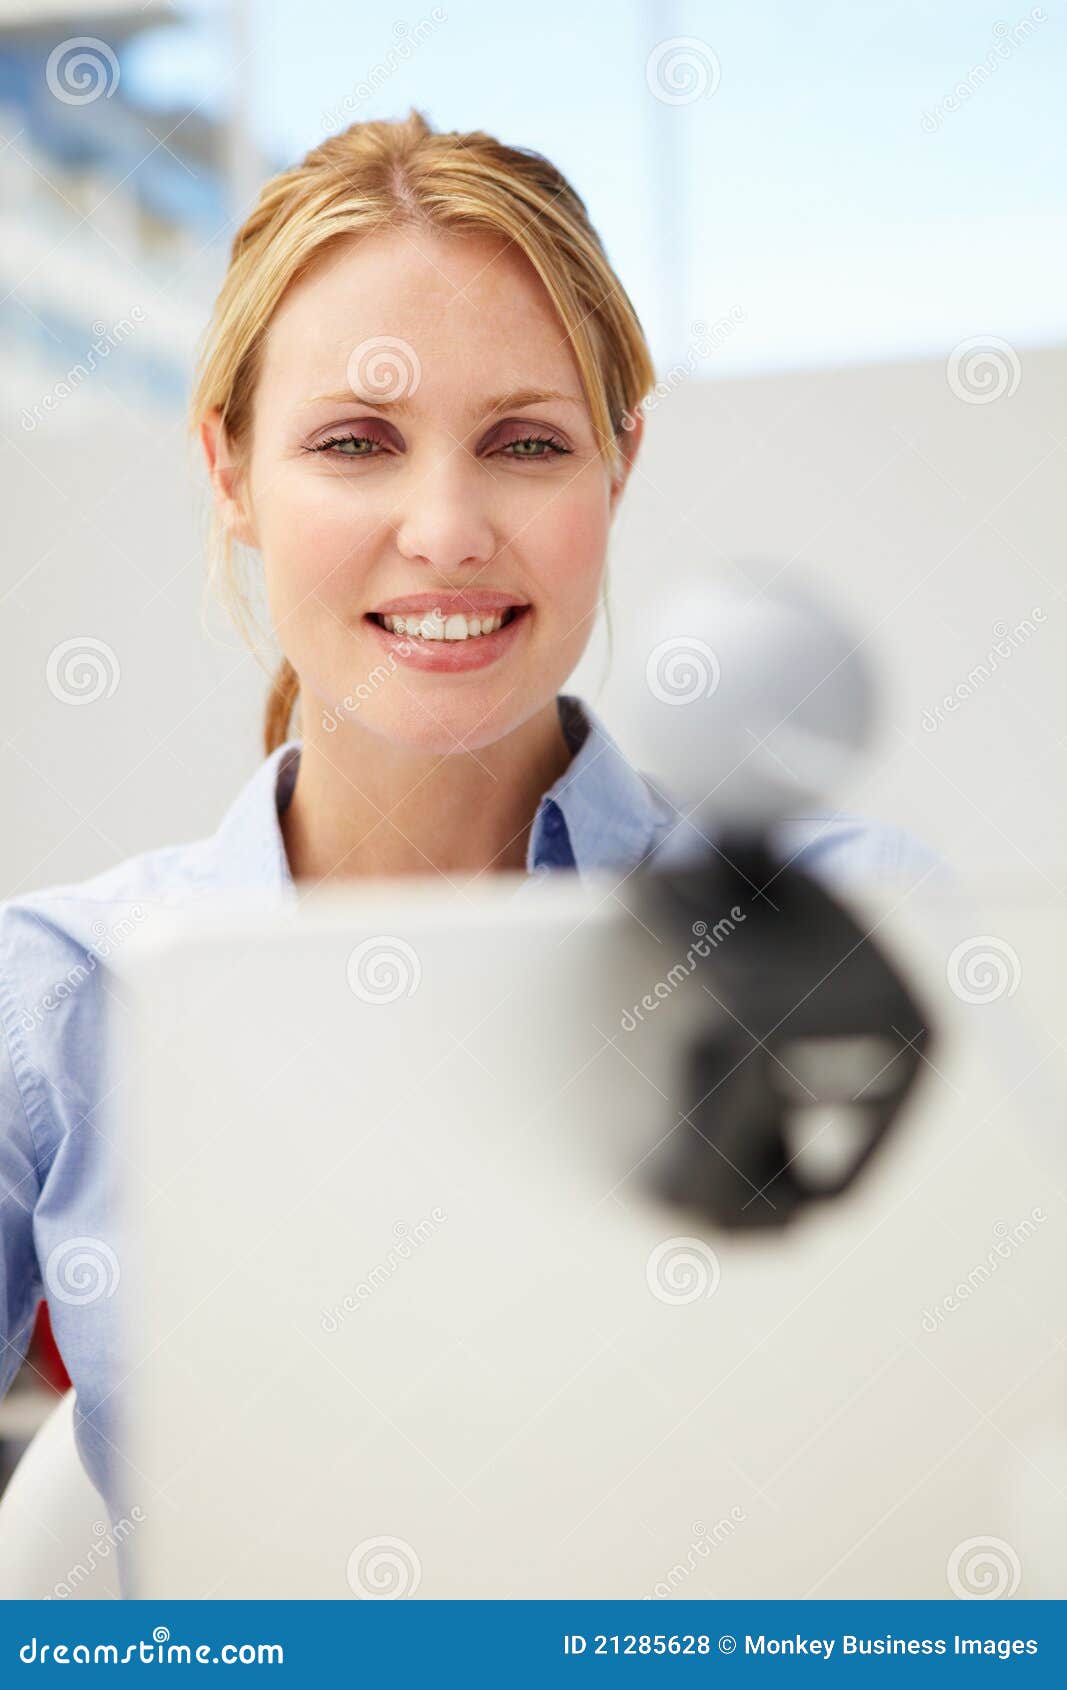 woman using webcam